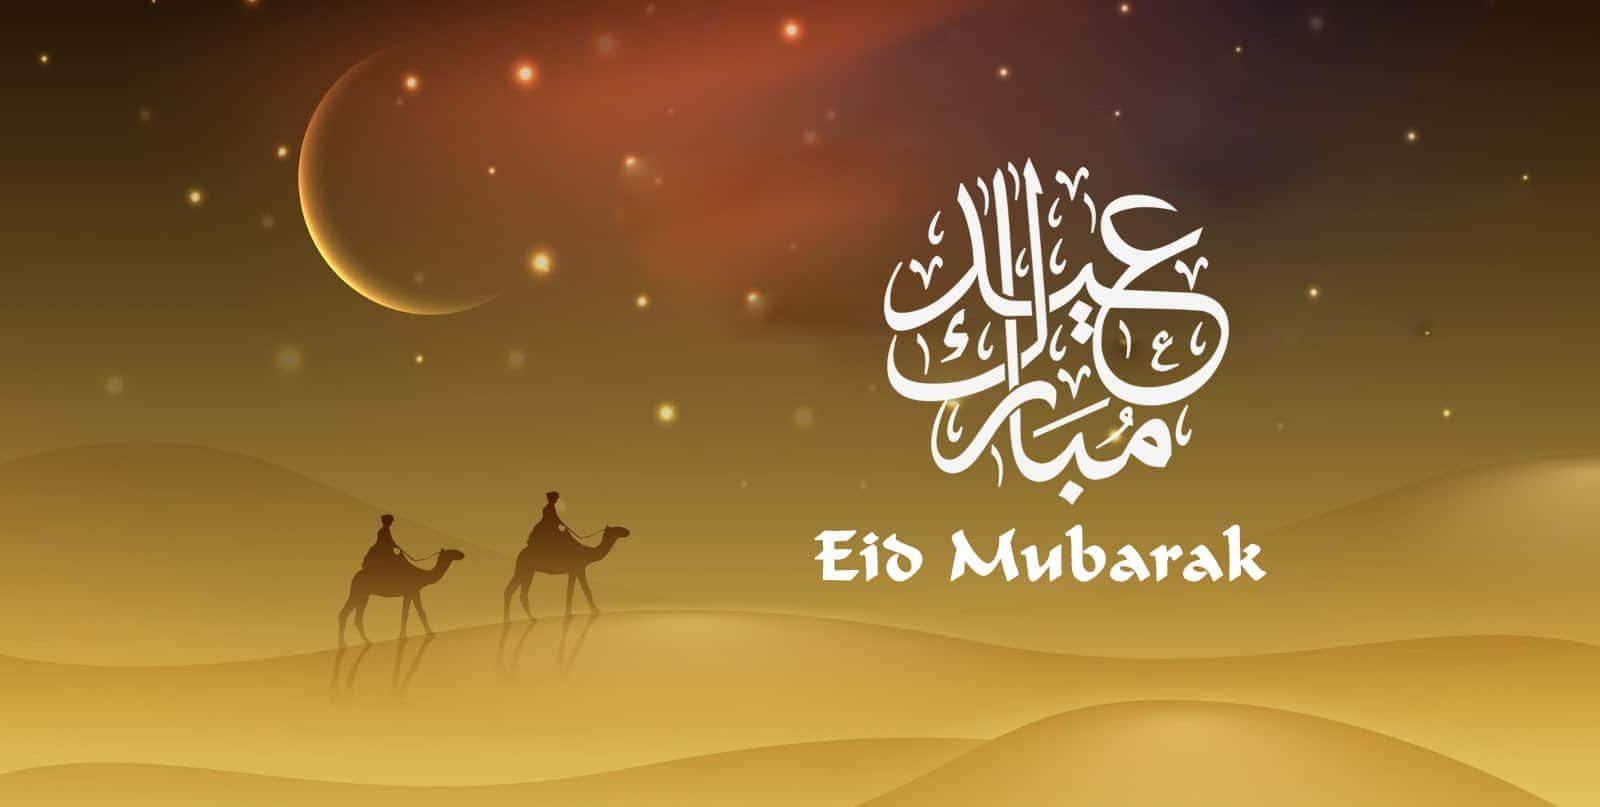 Wishing everyone a joyous Eid Mubarak!